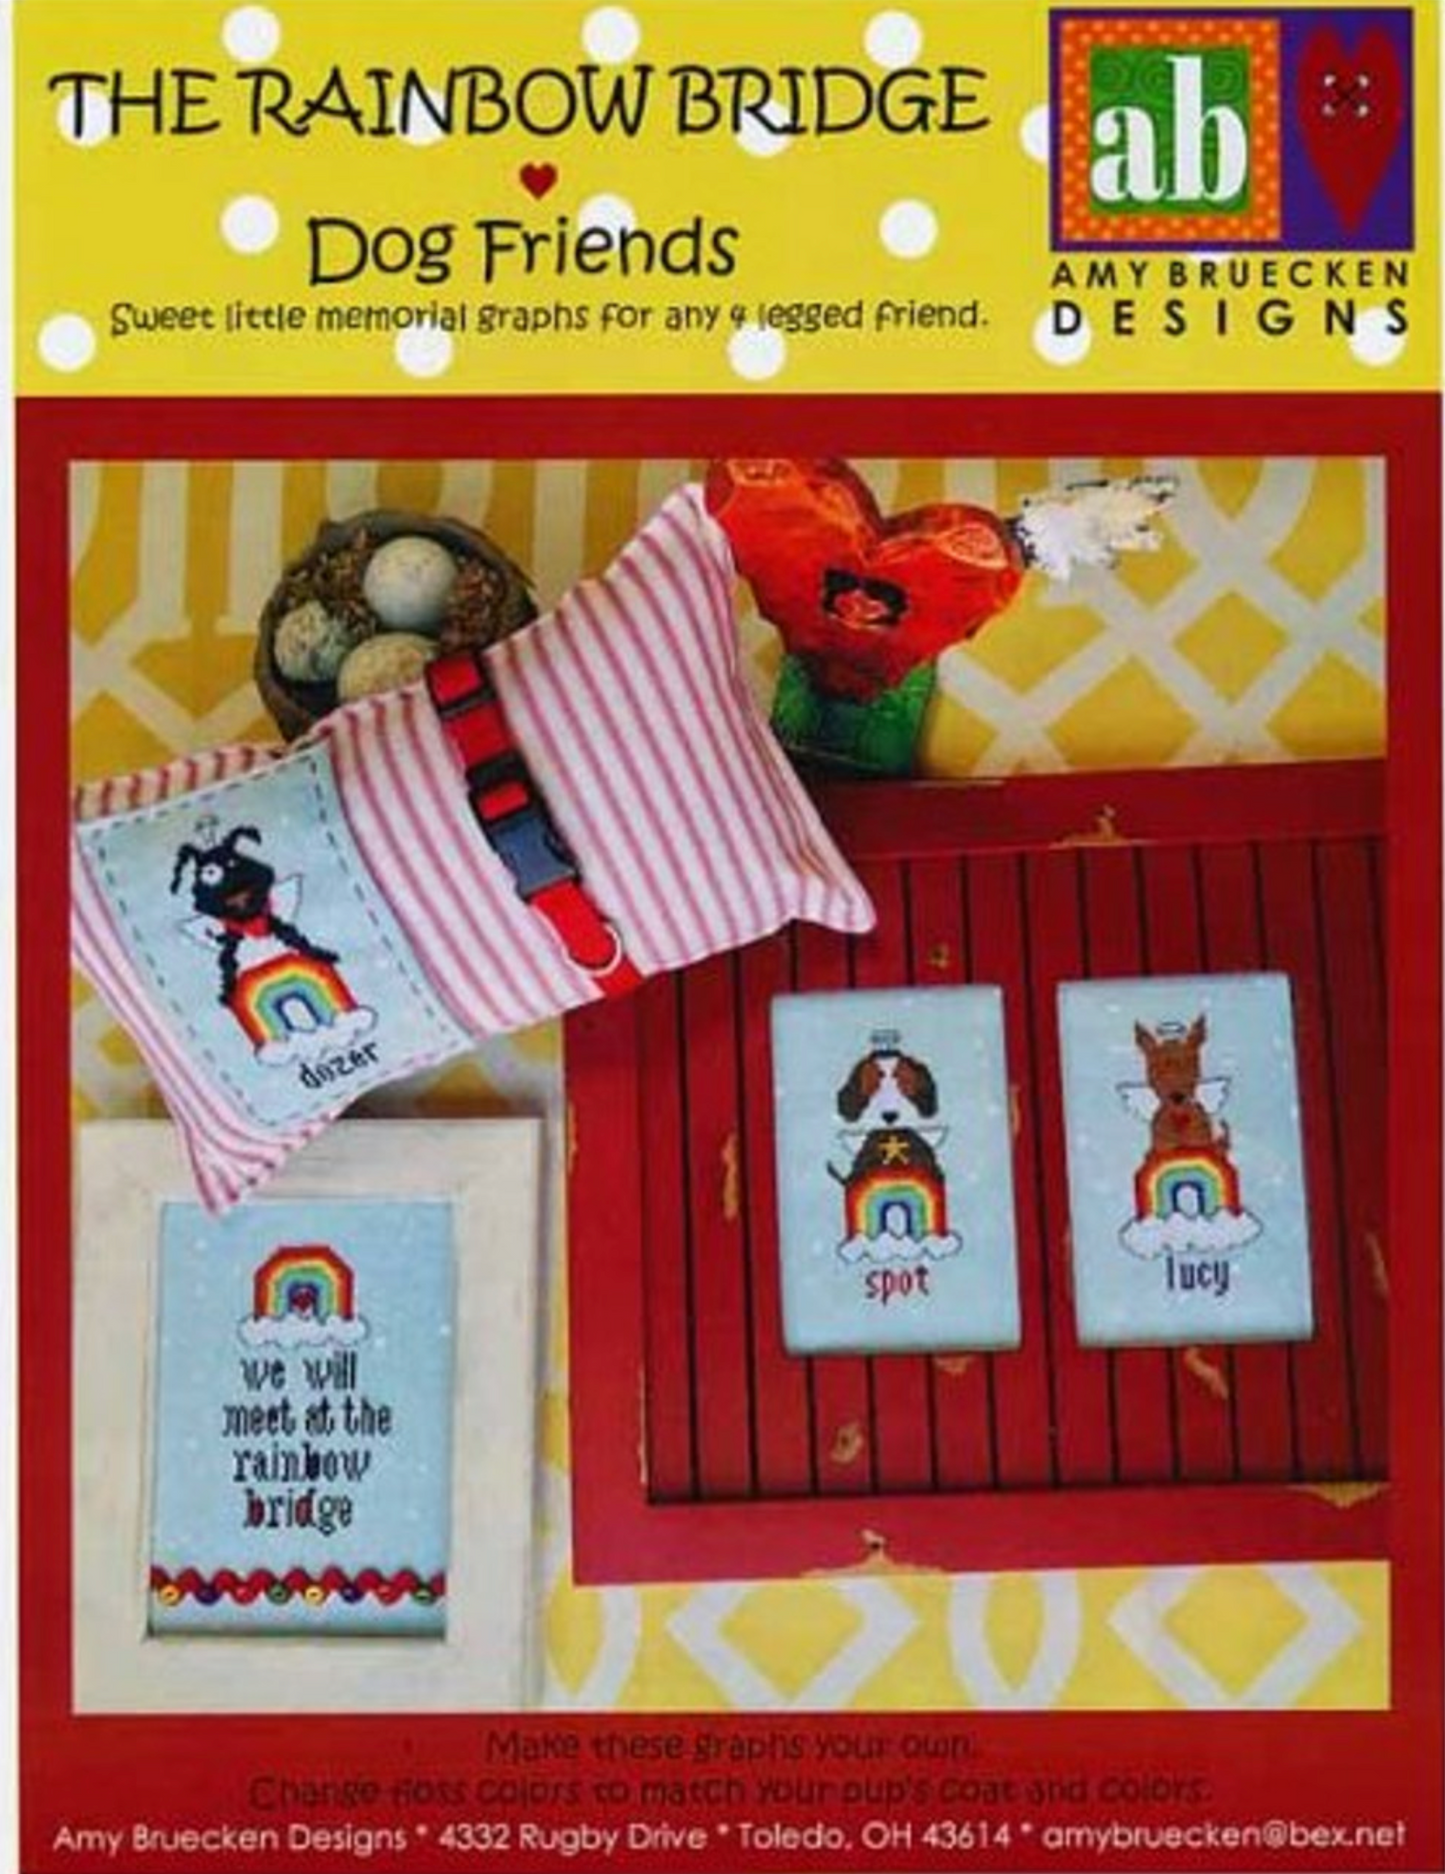 Amy Bruecken Designs - The Rainbow Bridge: Dog Friends